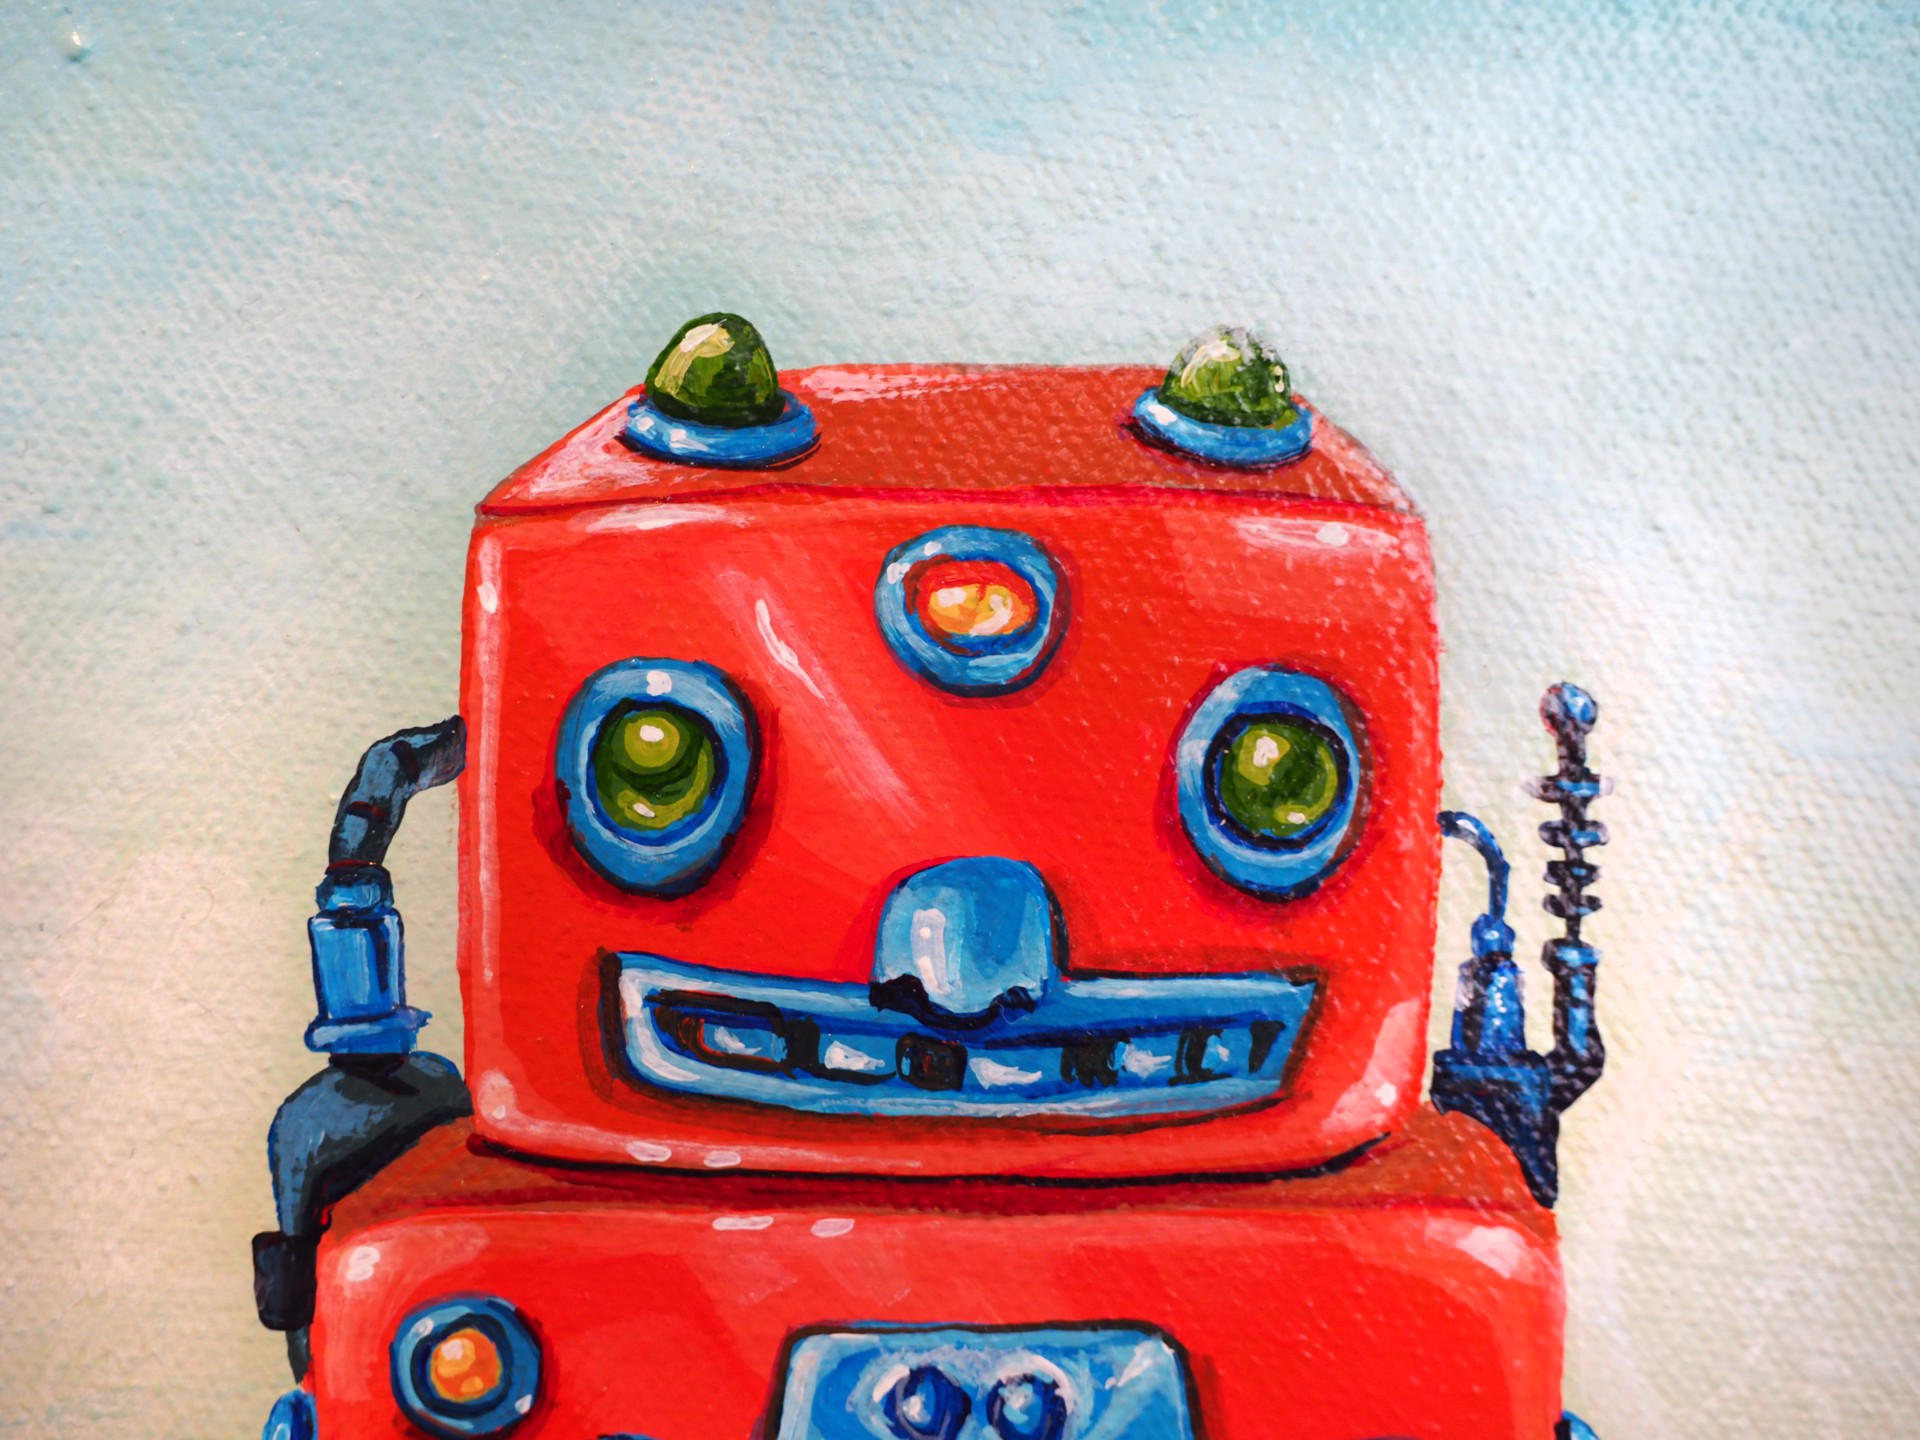 99 Robot by Tim Hooper